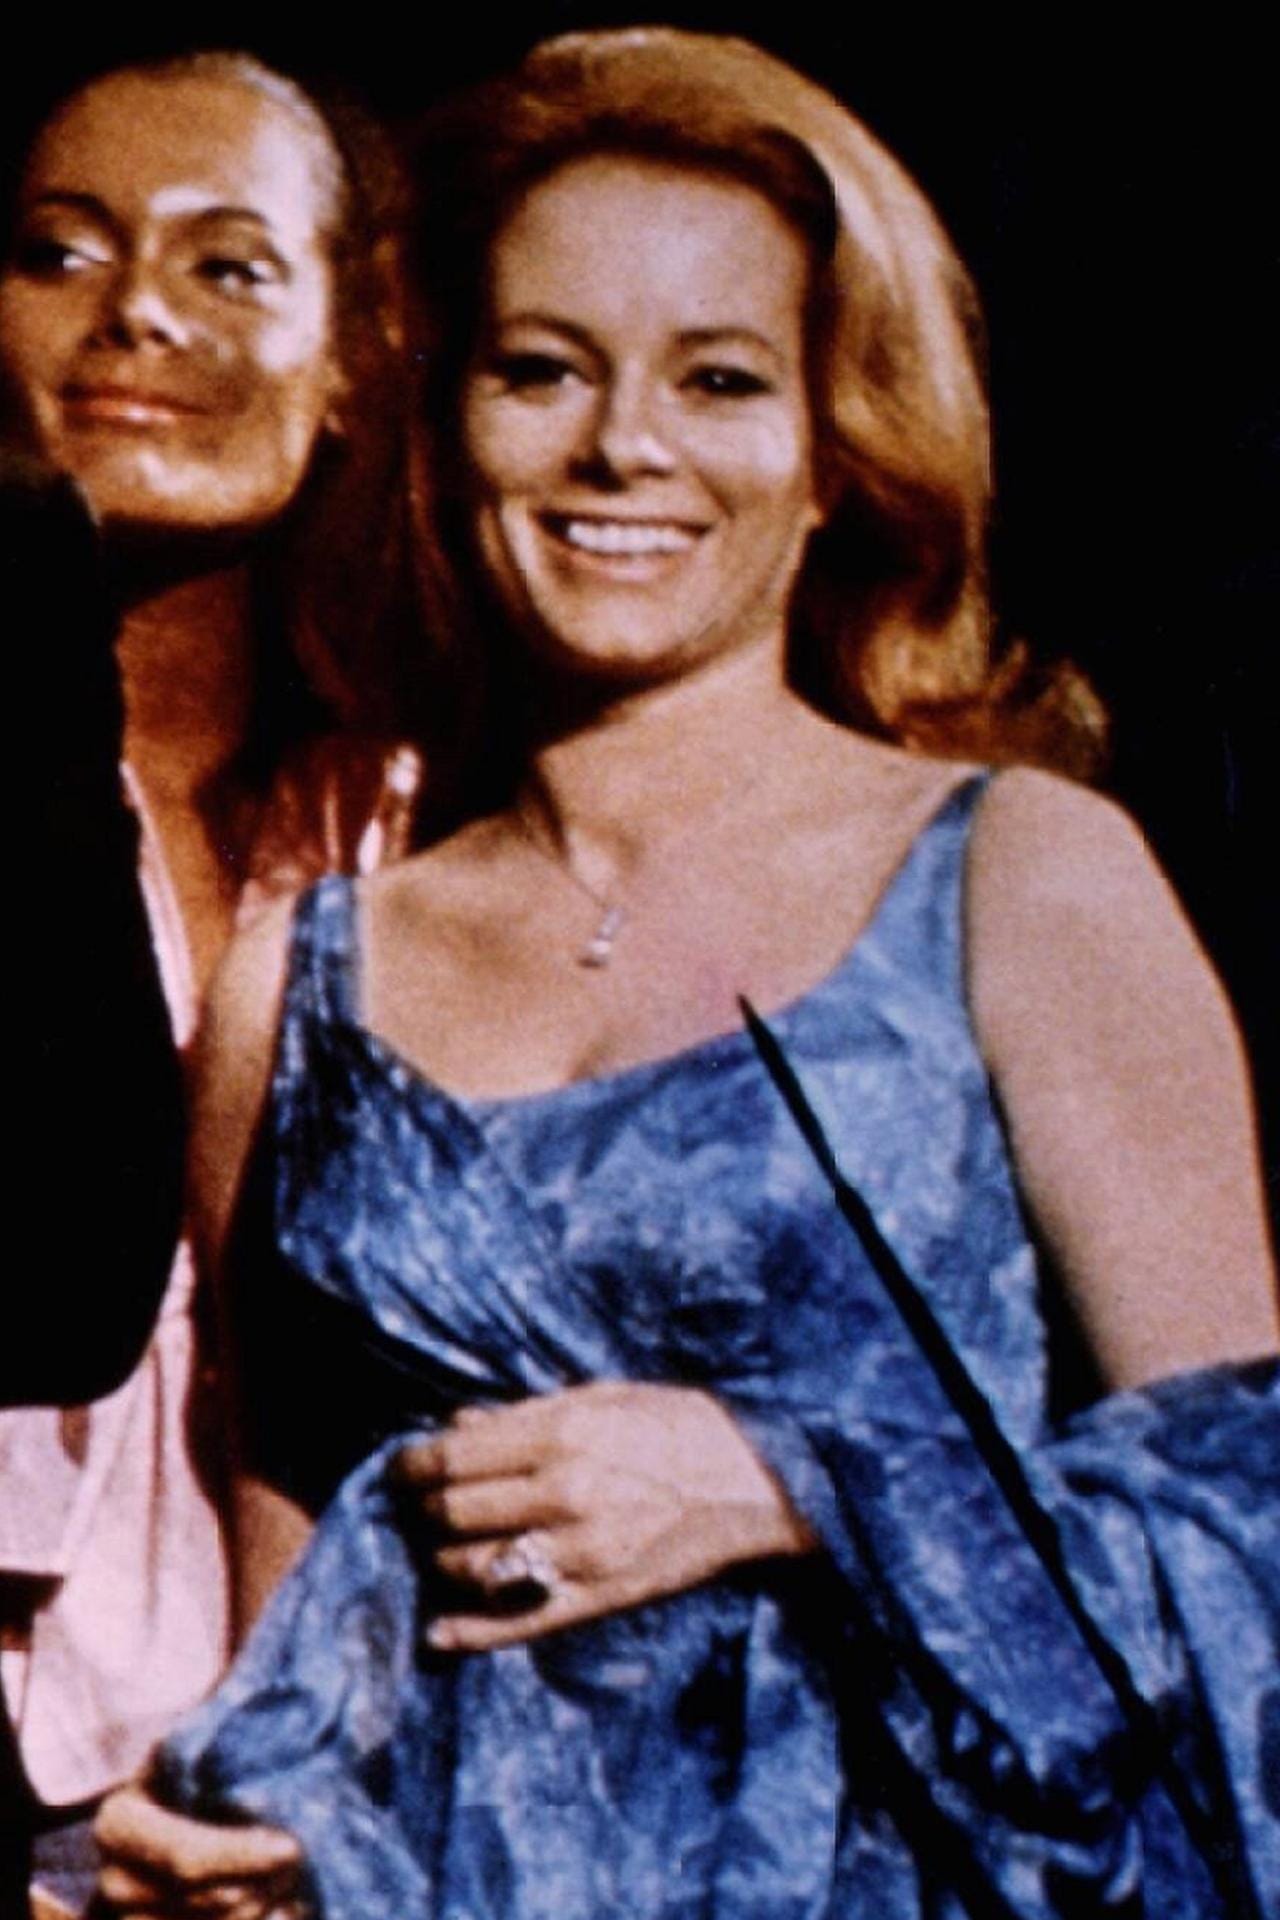 Luciana Paluzzi als Fiona Volpe in "Feuerball" (1965)